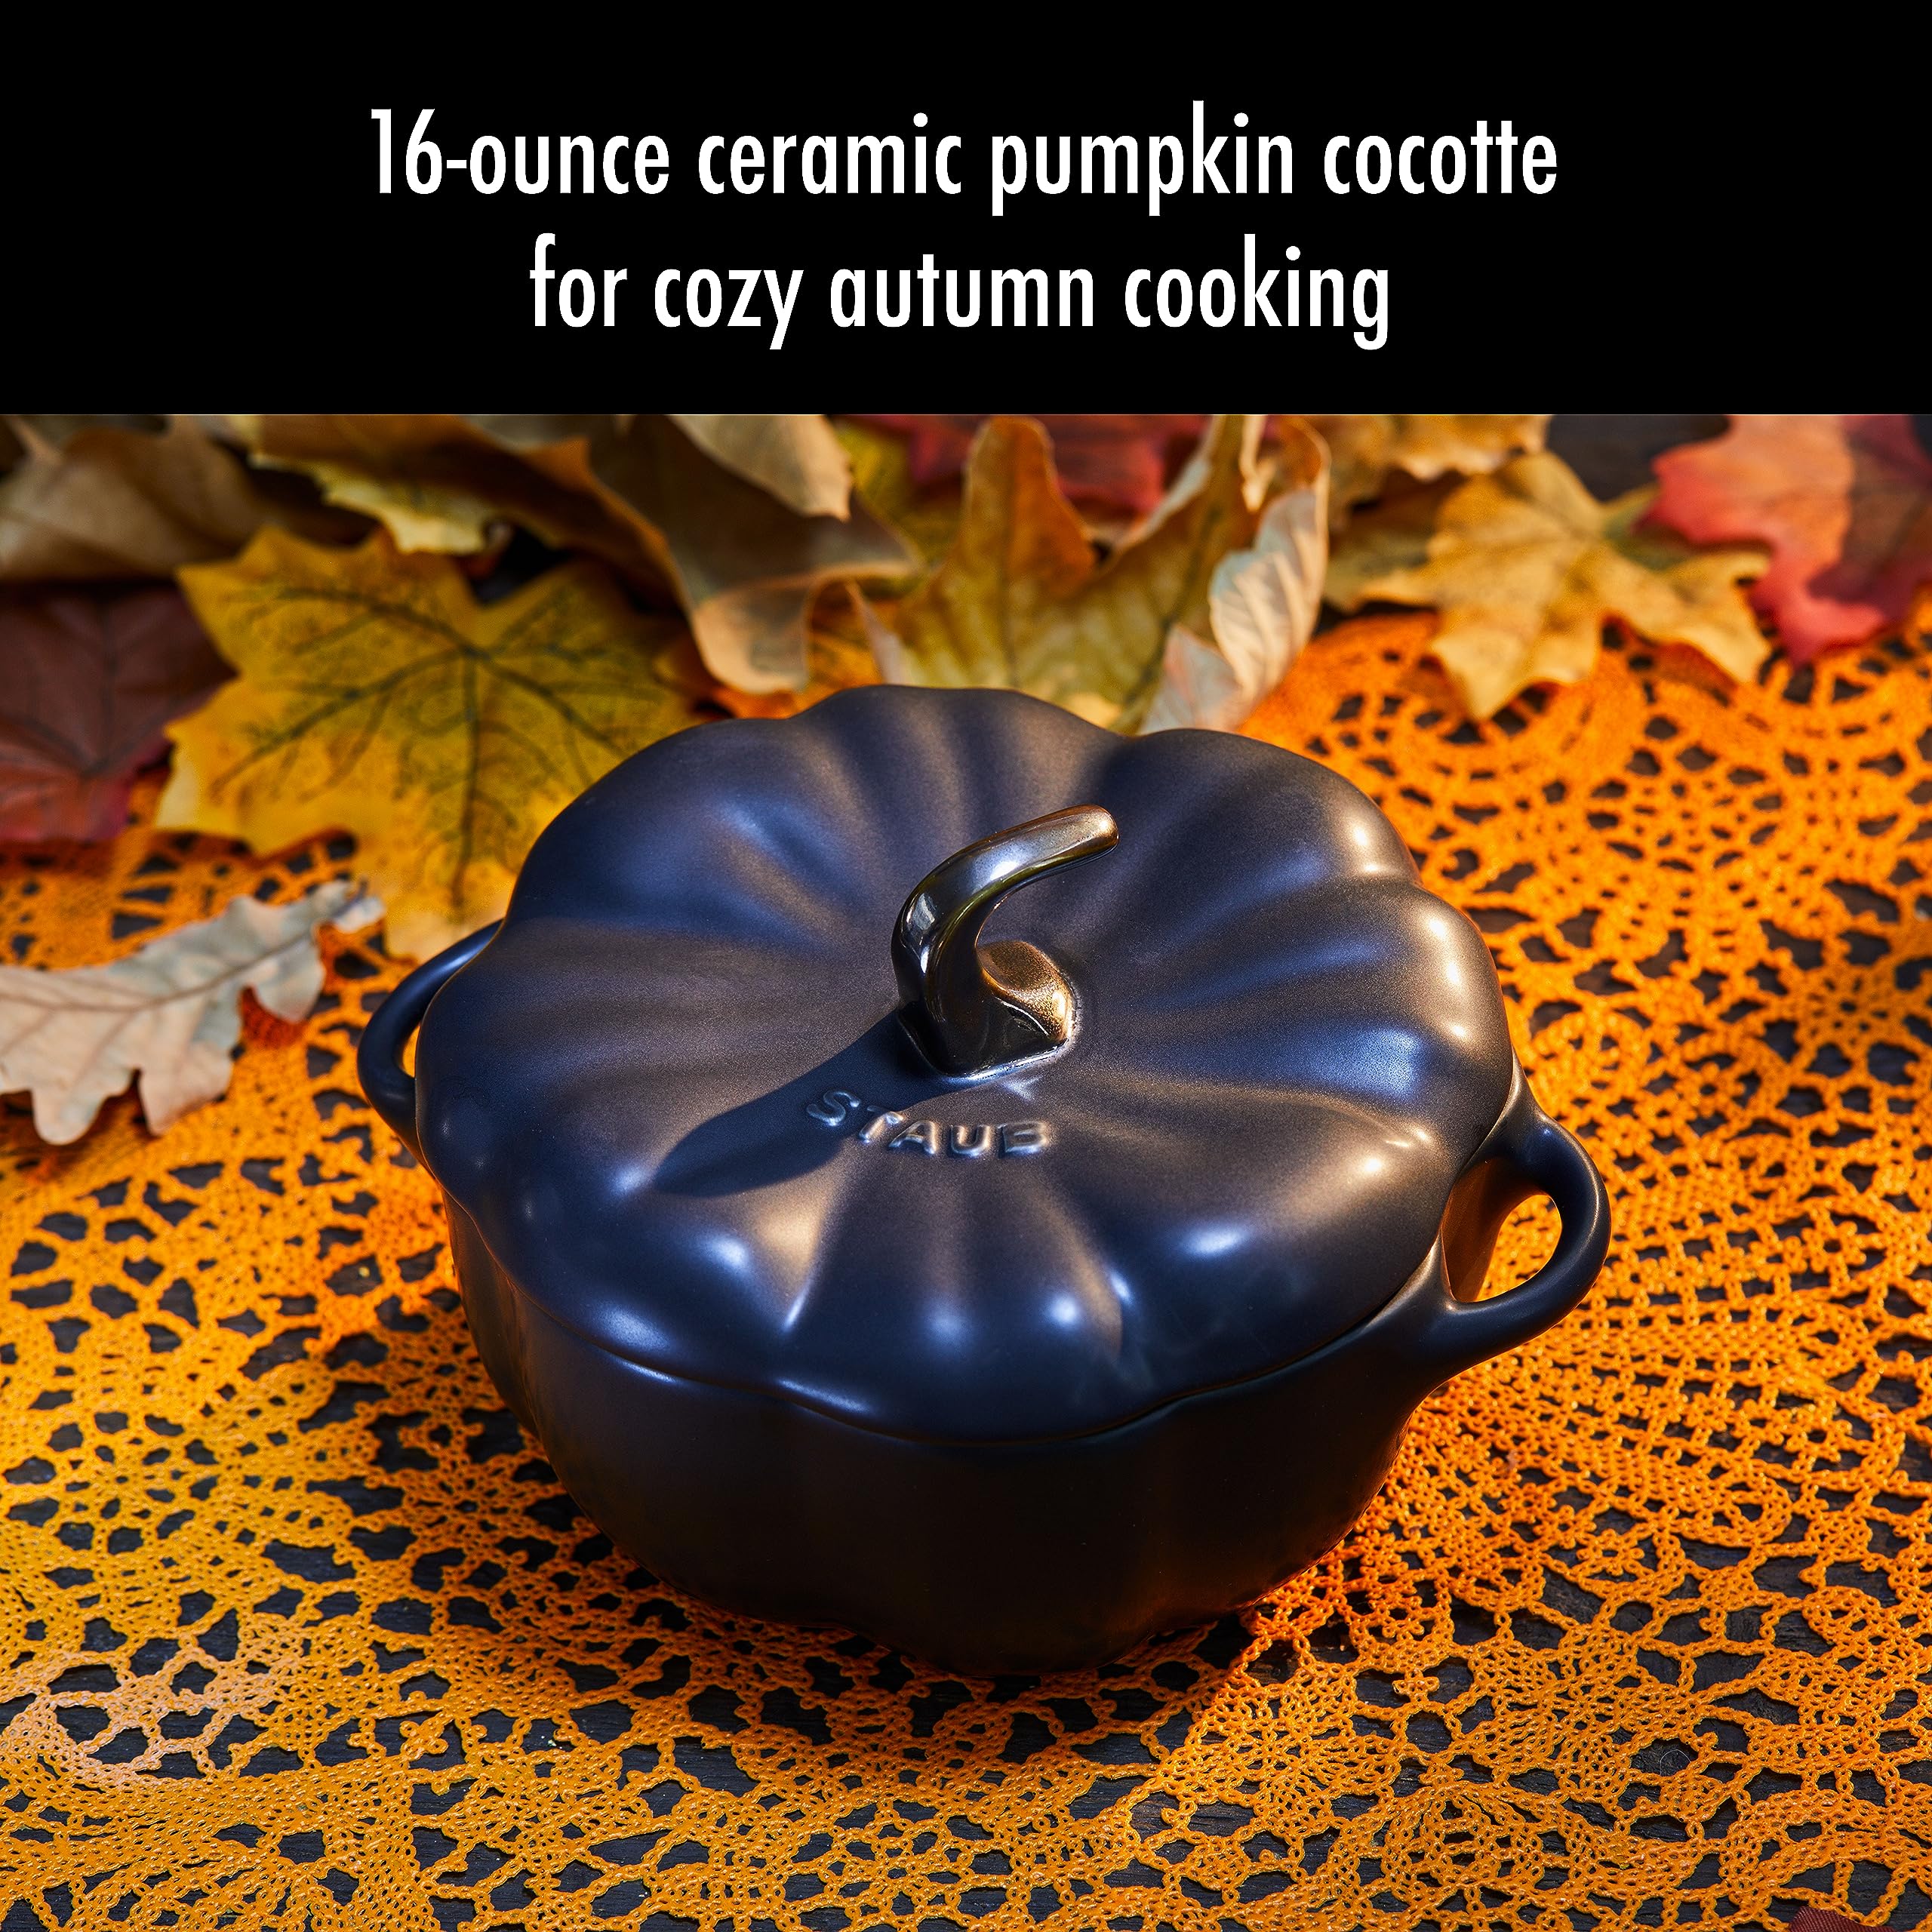 STAUB Ceramic Pumpkin Dish, .5 Qt, 16-oz, Matte Black, Oven Safe